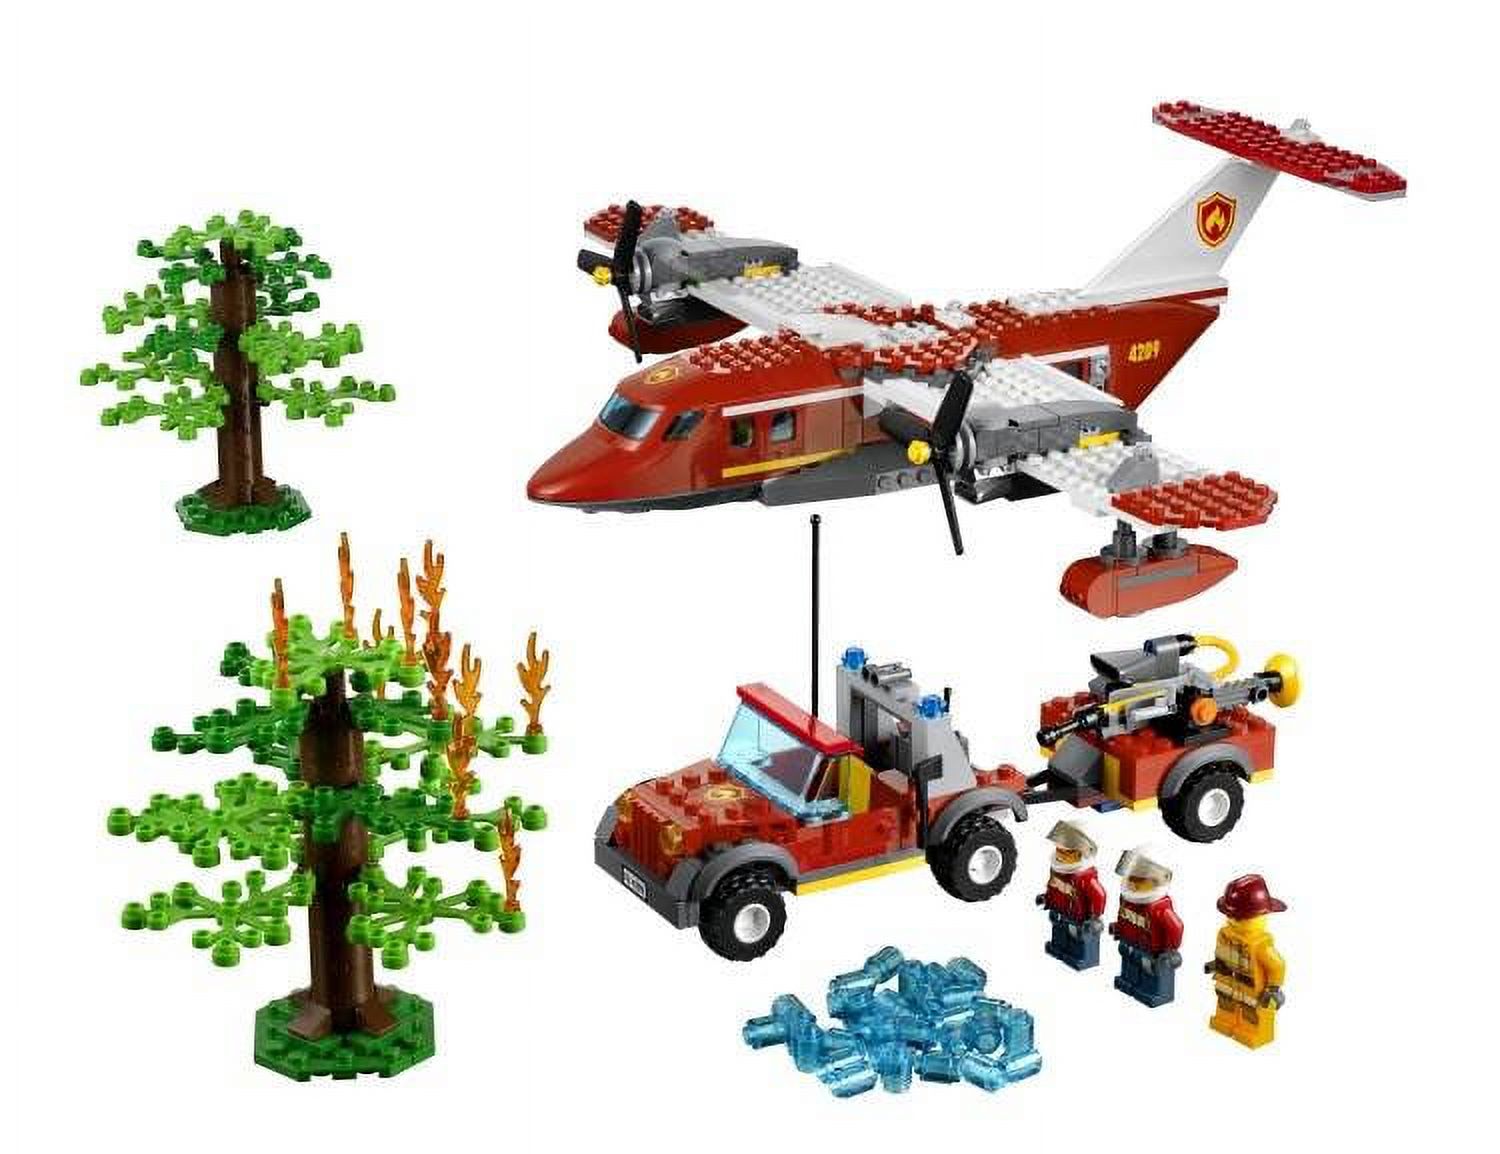 LEGO City Fire Plane 4209 - image 1 of 9